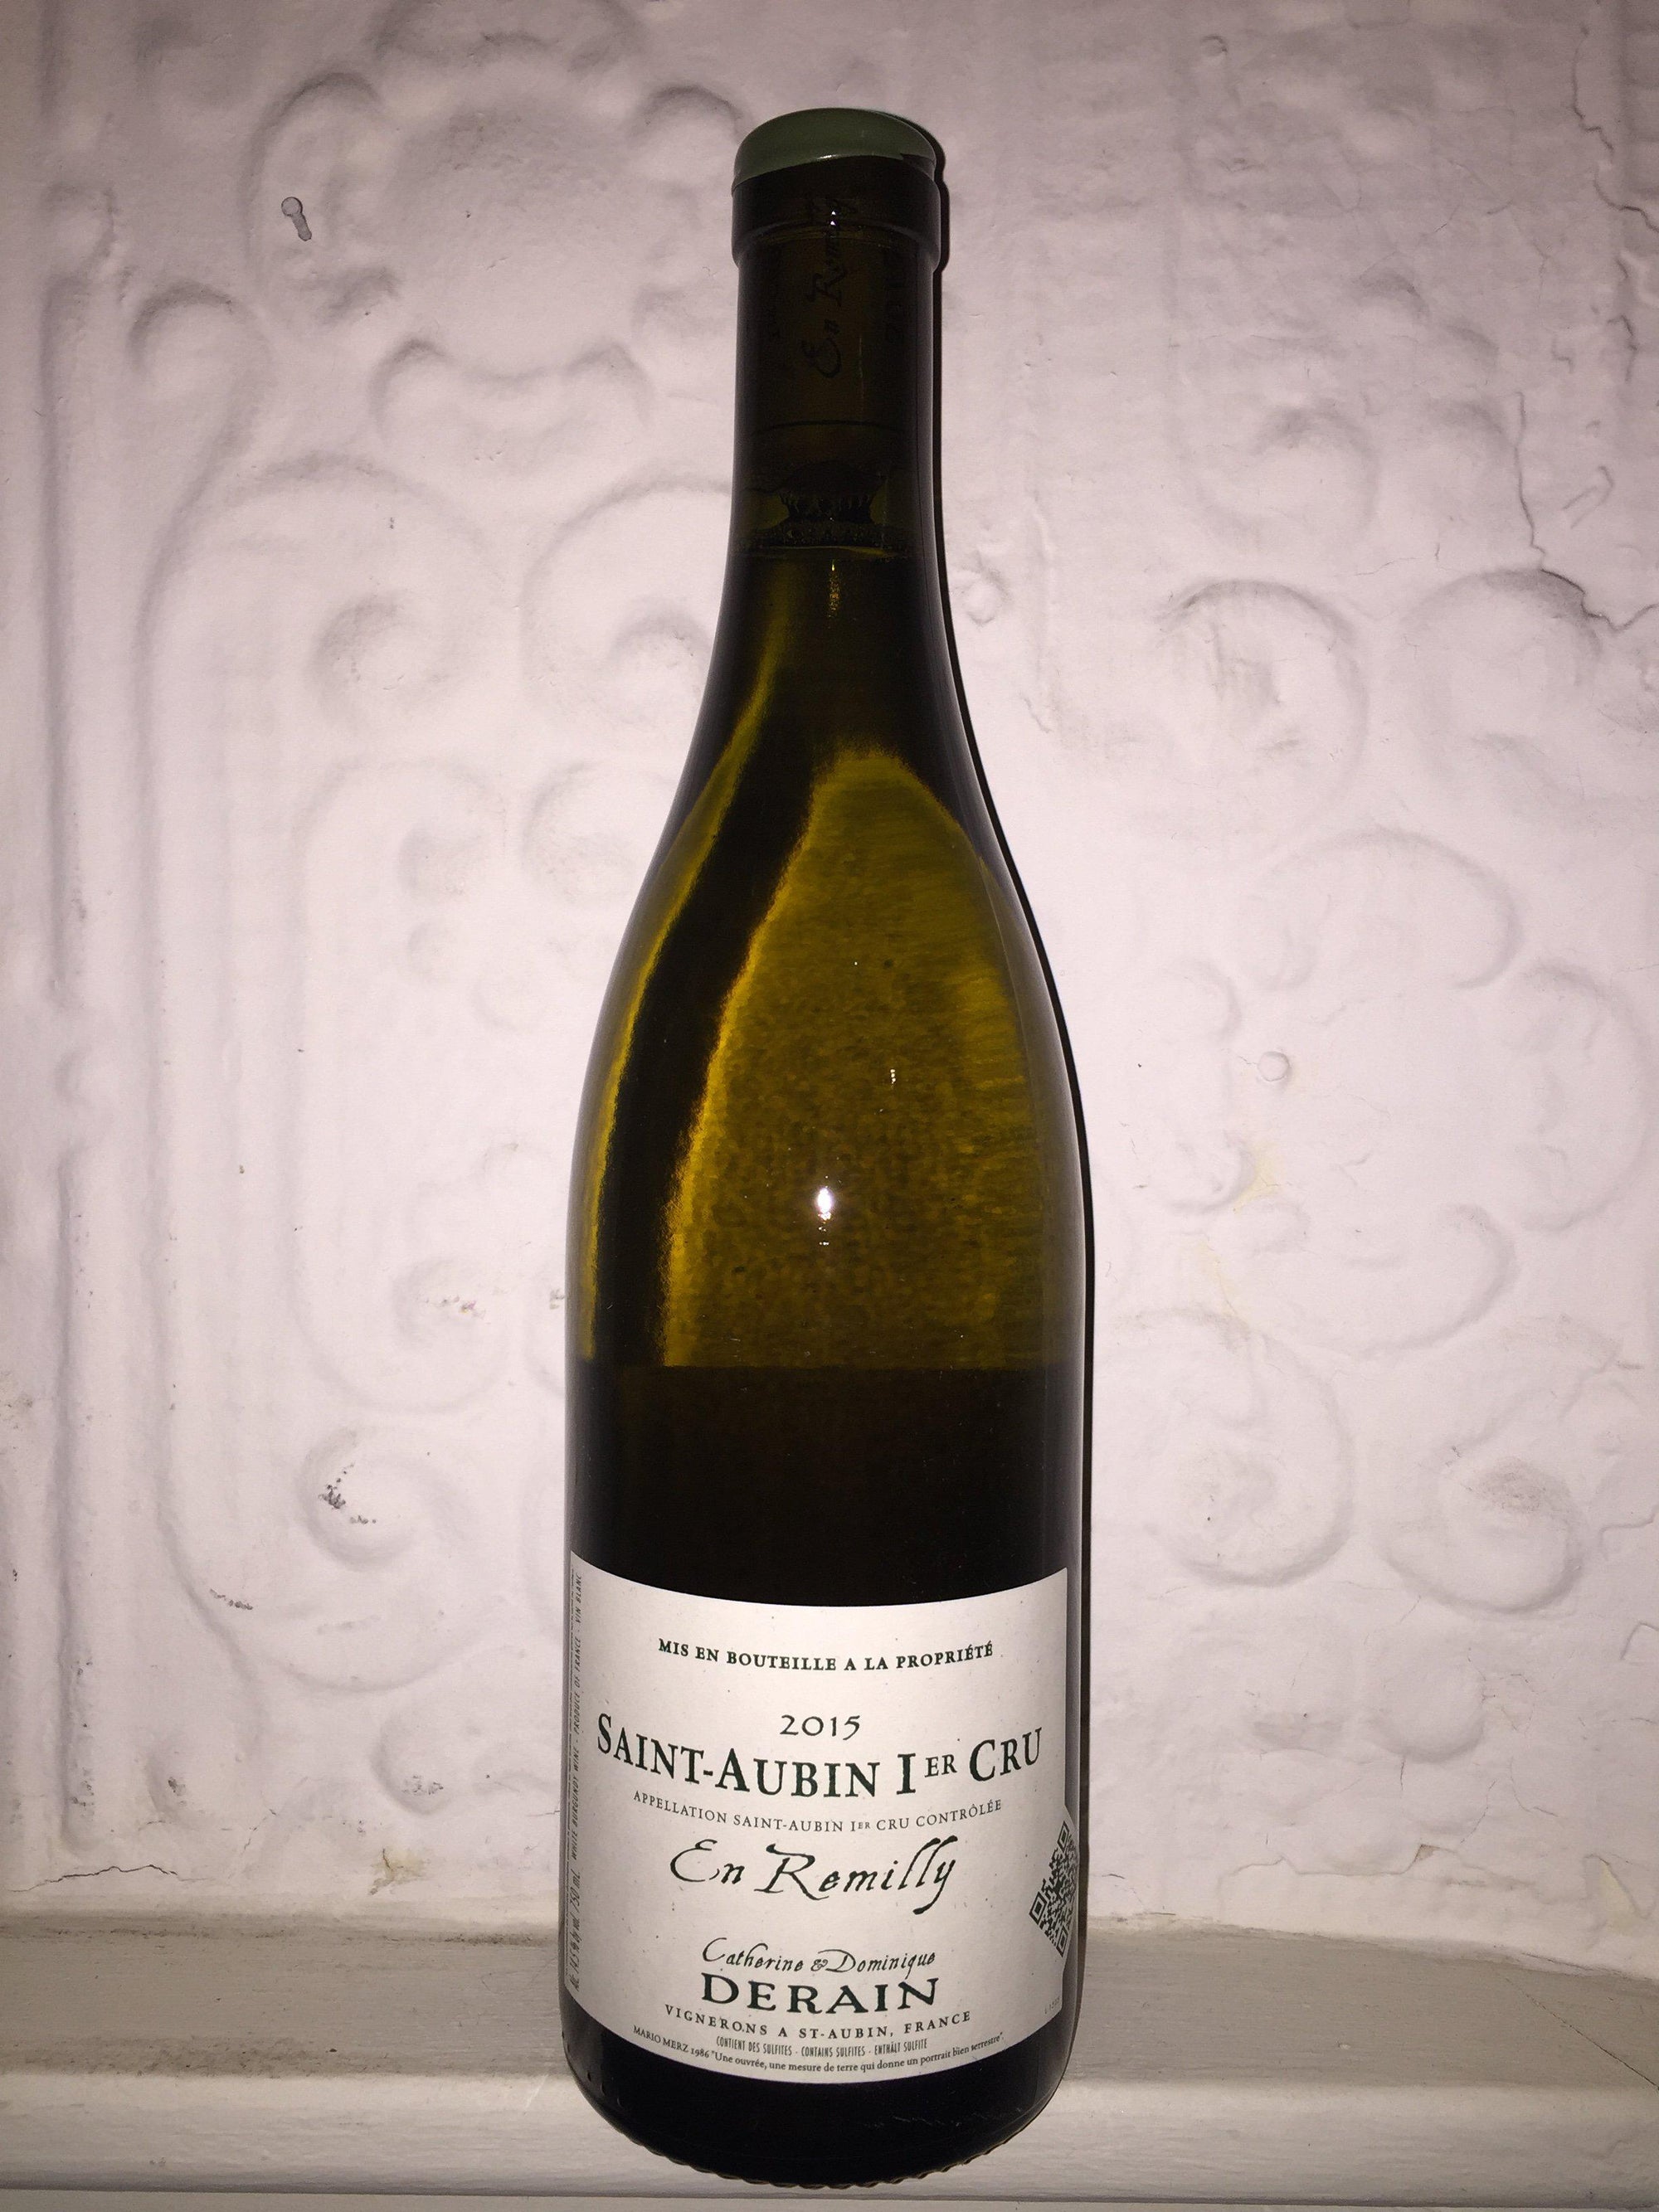 Saint Aubin 1er Cru "En Remilly", Dominique Derain 2015 (Burgundy, France)-Wine-Bibber & Bell